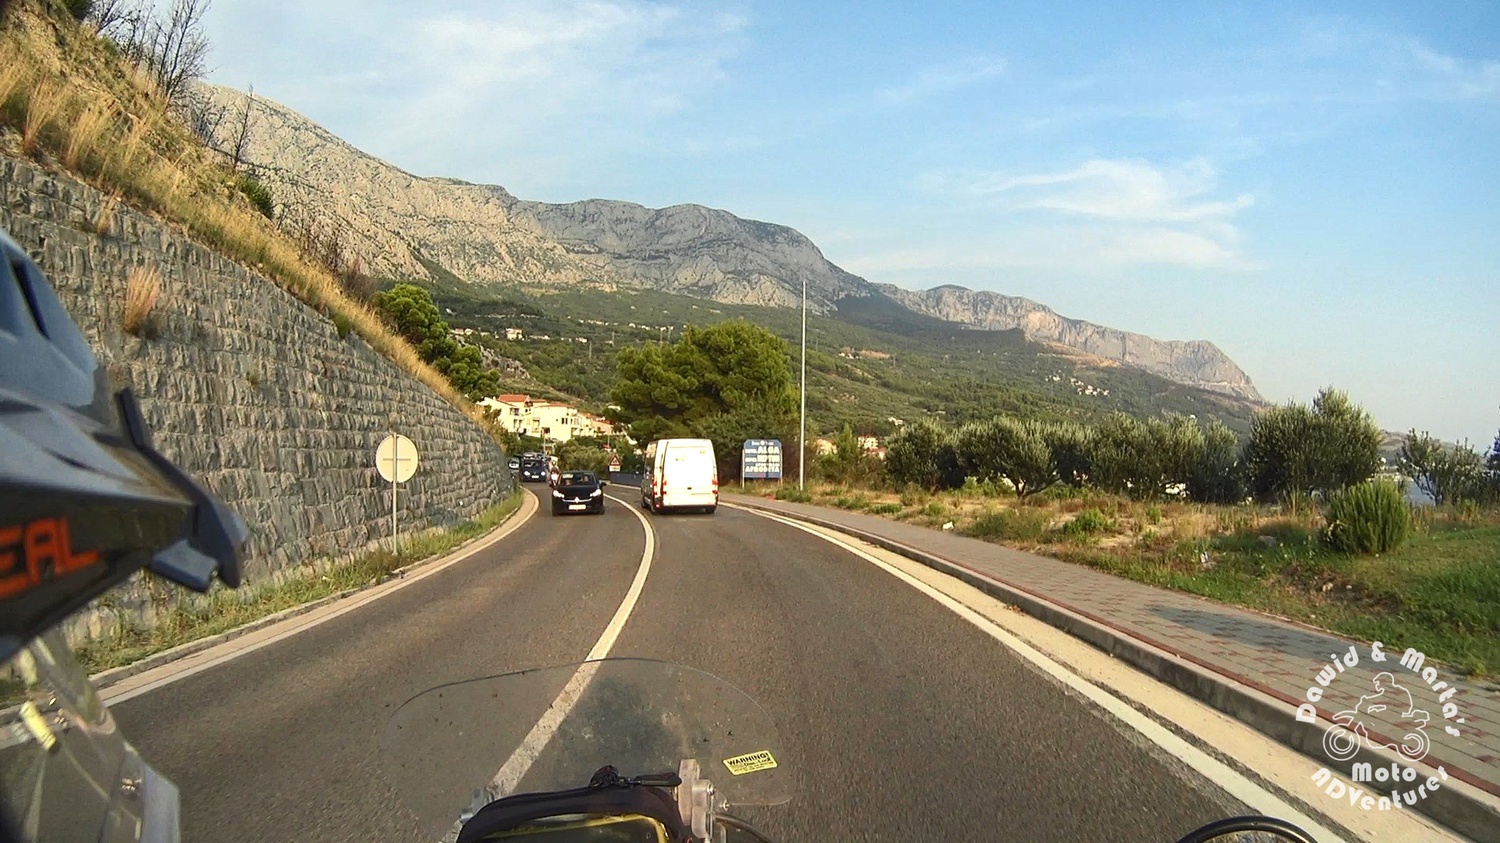 Adriatic Highway between Podgora and Makarska